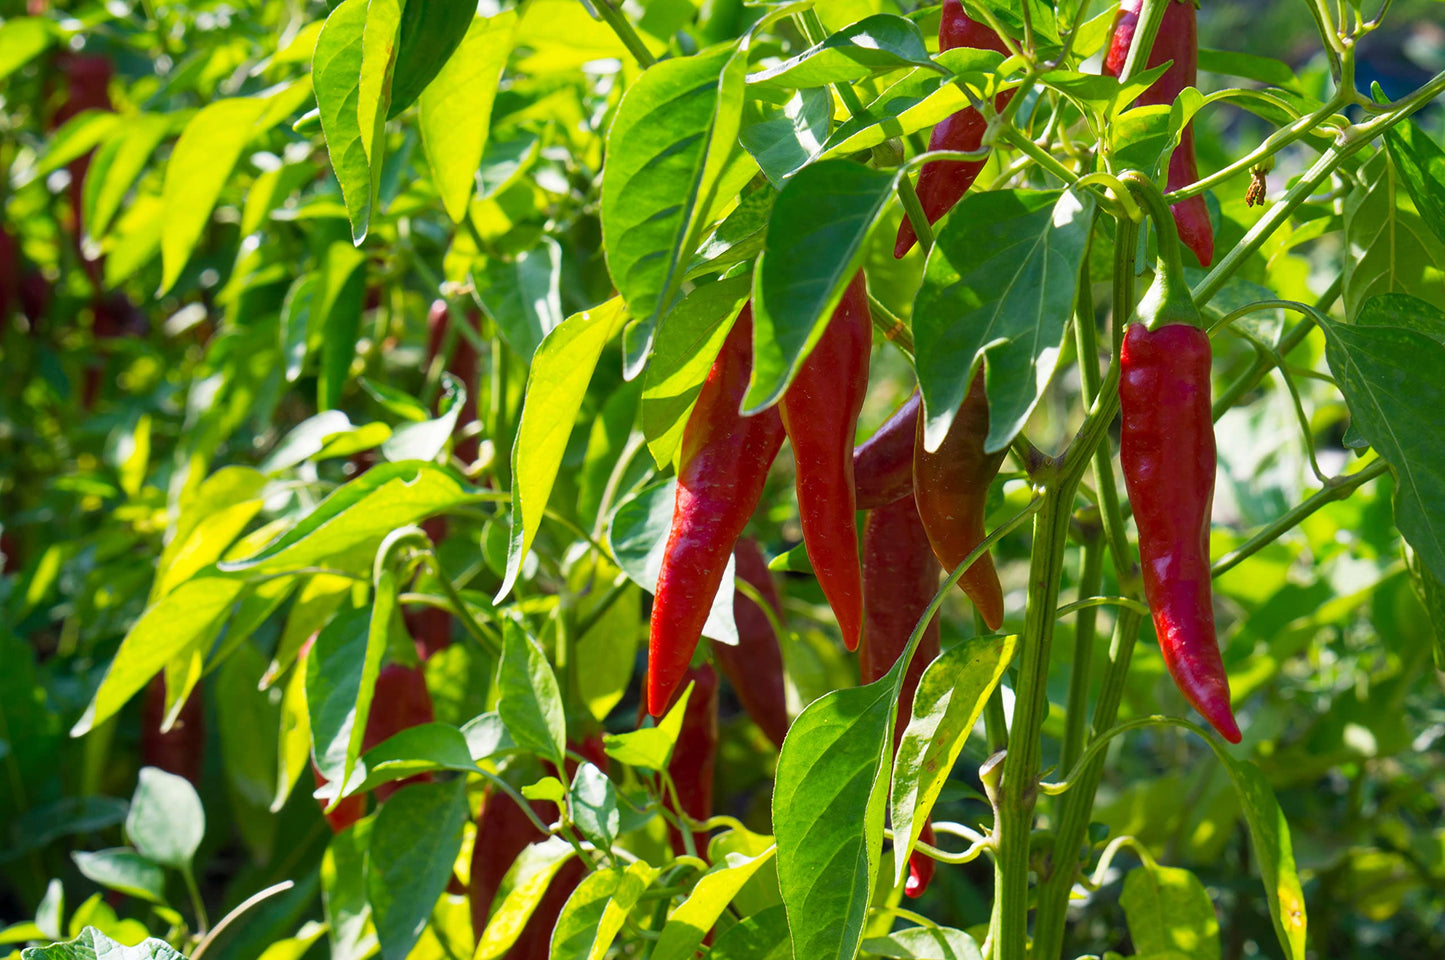 'Cheyenne' Chilli Pepper - 2 x Full Plants in 9cm Pots